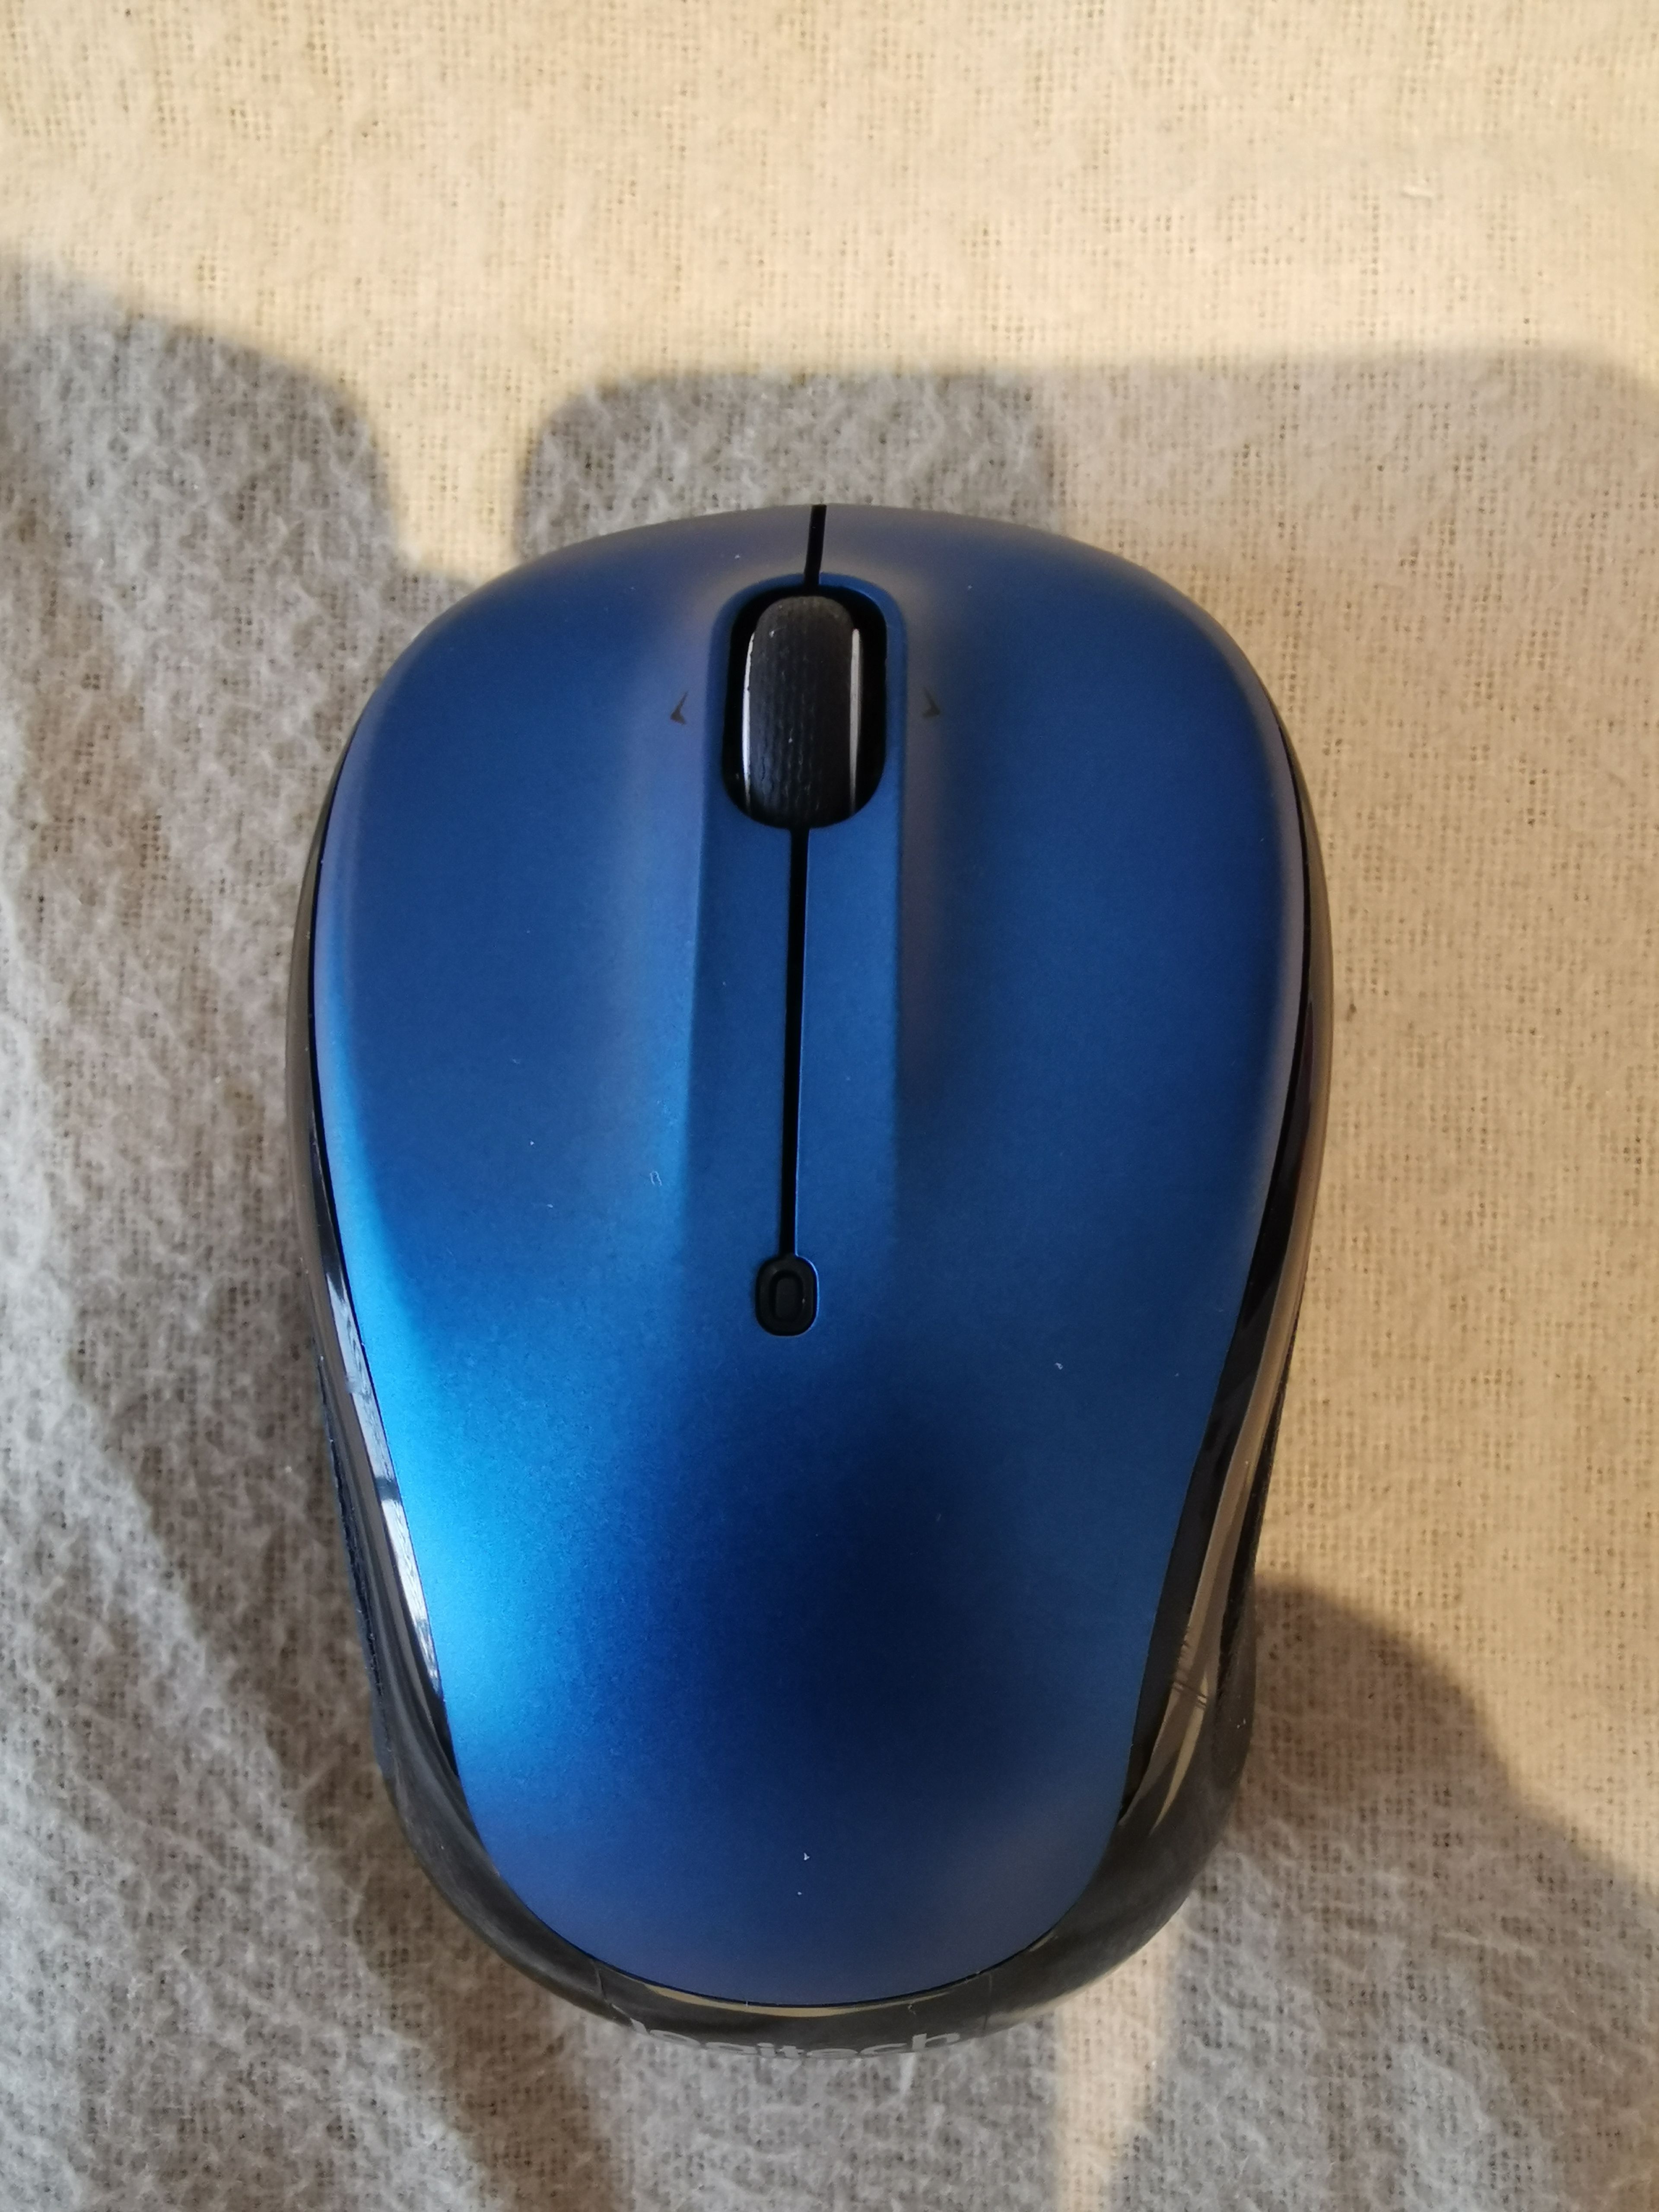 Logitech Wireless Mouse Model: M325. Like New for $5.00